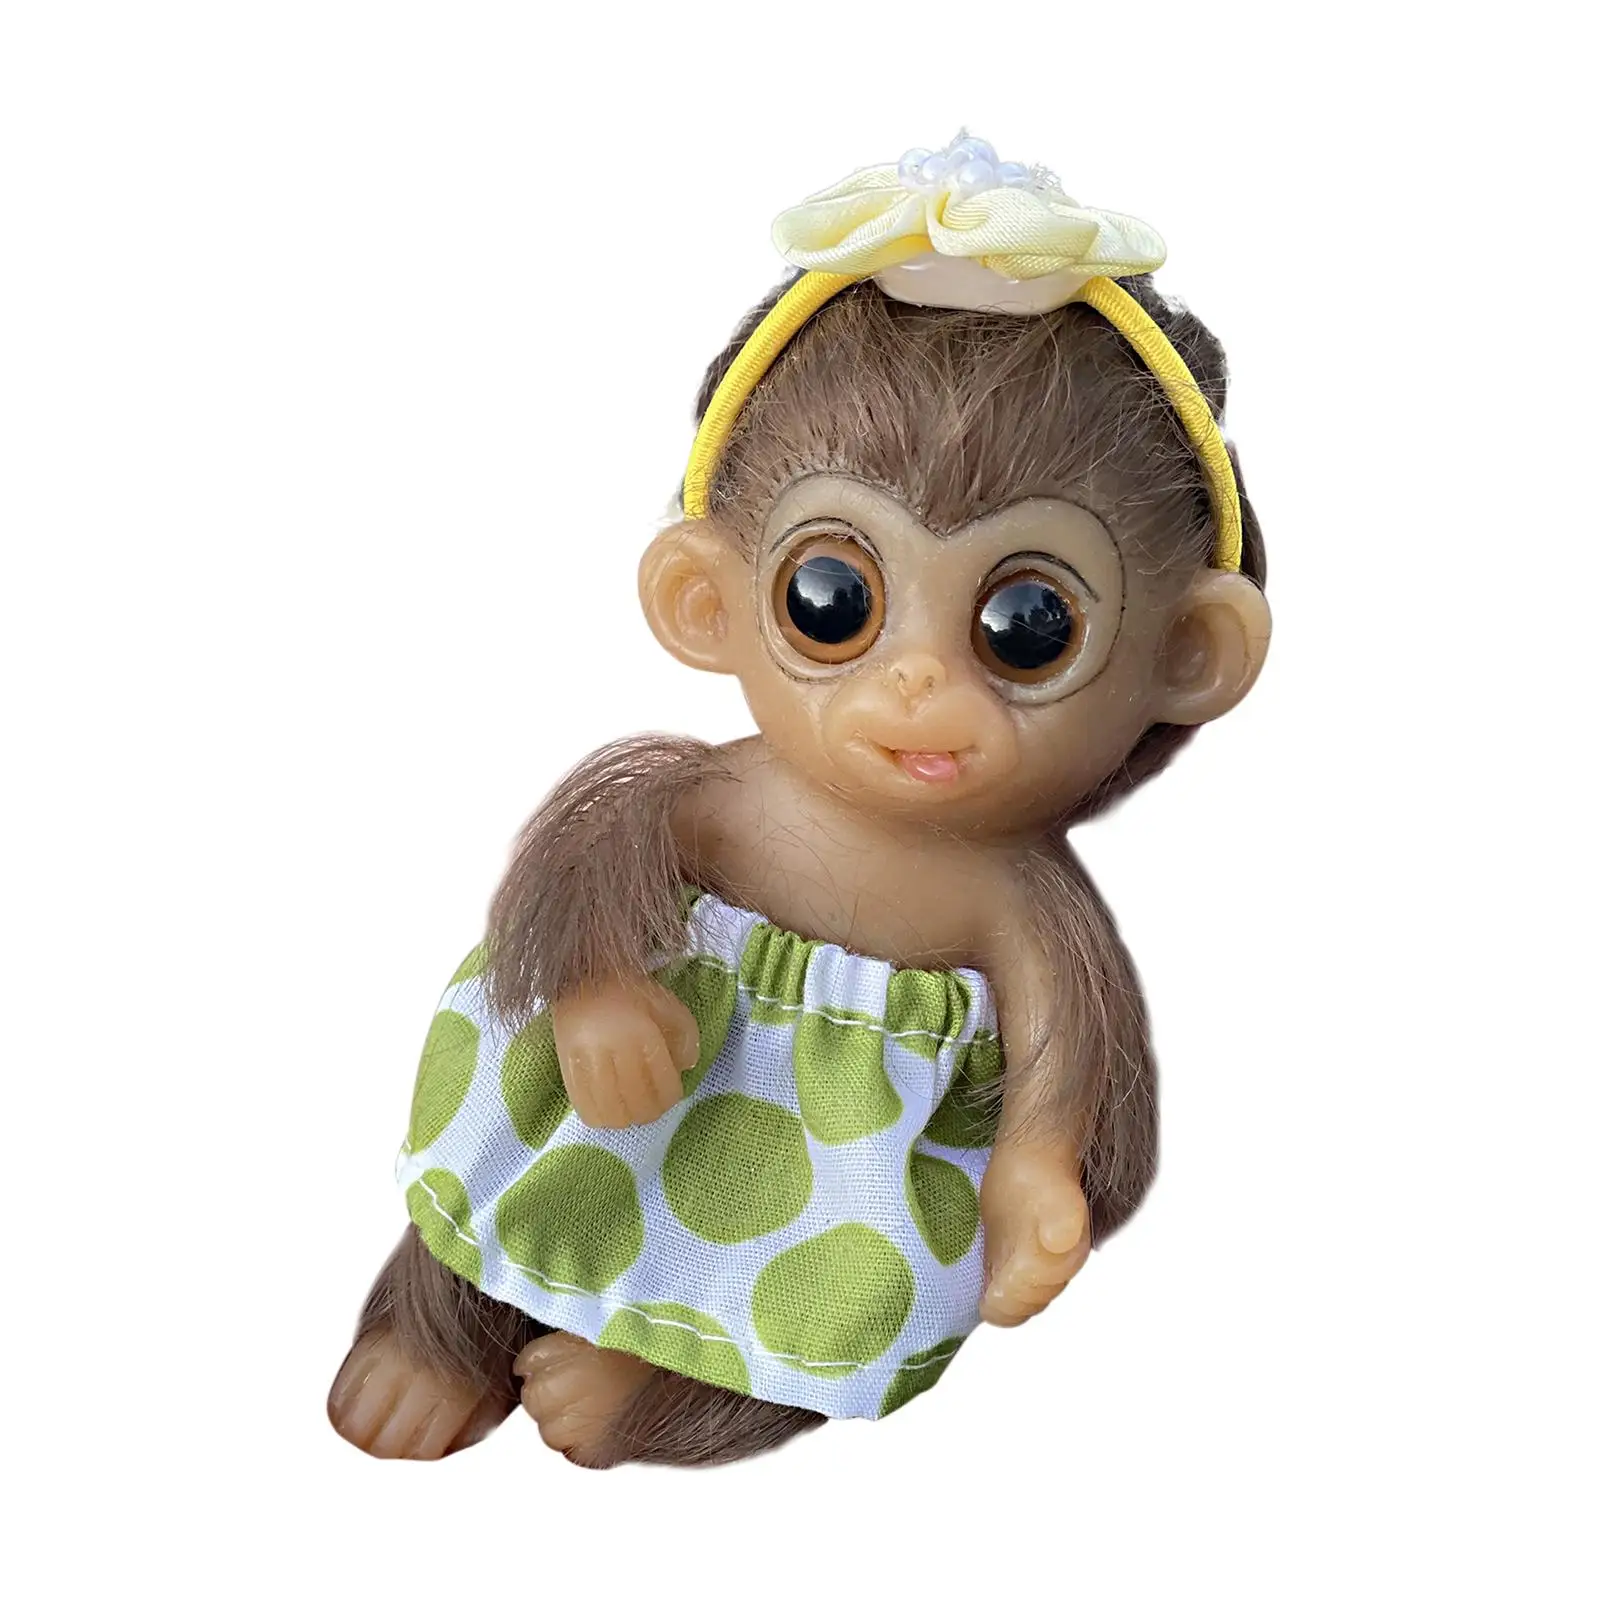 6inch Realistic Monkey Home Decoration Soft Big Eyes Monkey Toys Baby Doll for Kids Toddlers Children Girls Boys Birthday Gift